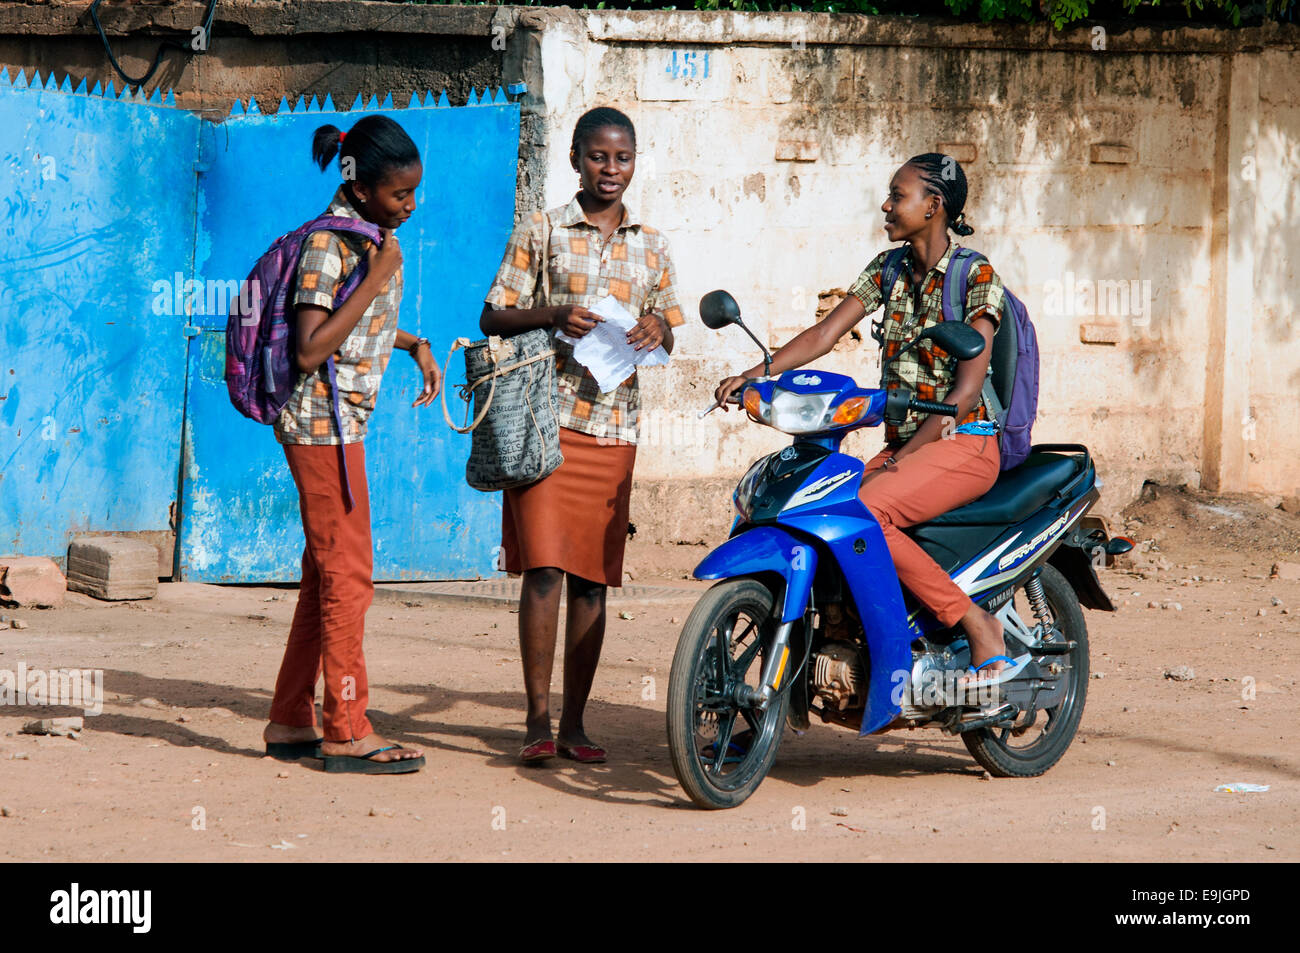 street scene with teenagers, Ouagadougou, Burkina Faso Stock Photo - Alamy